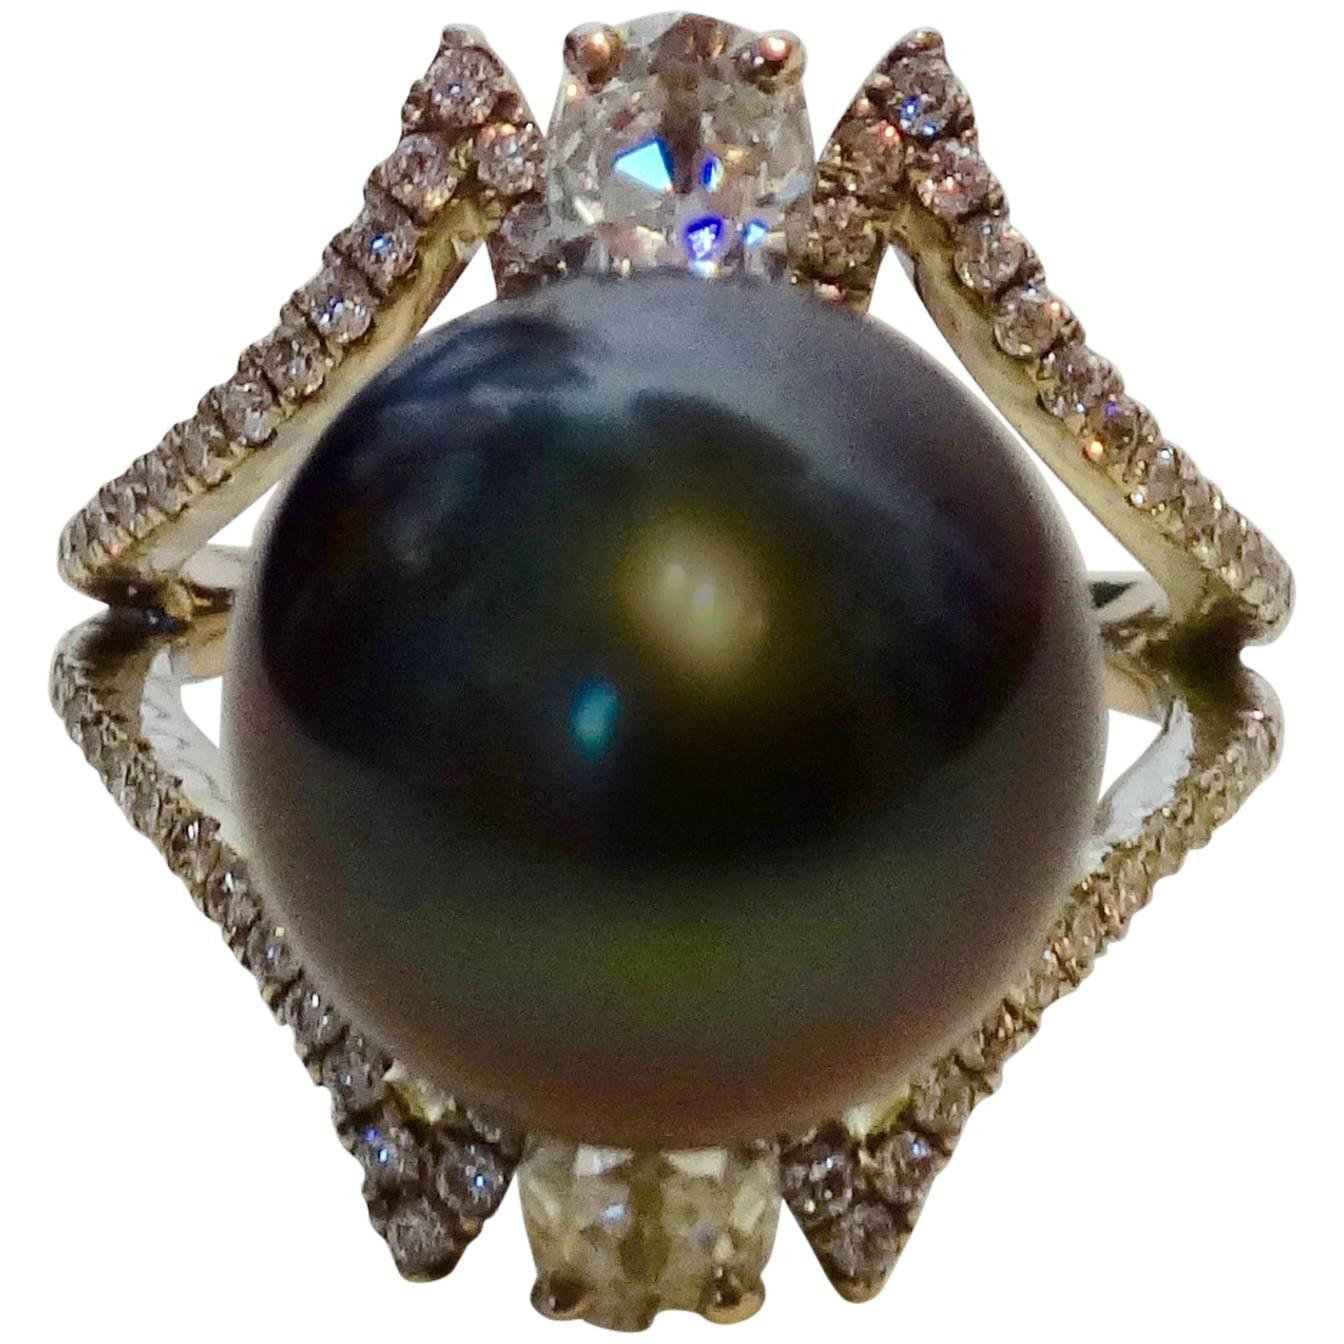 Black Tahitian Pearl Diamond White Gold Cocktail Ring